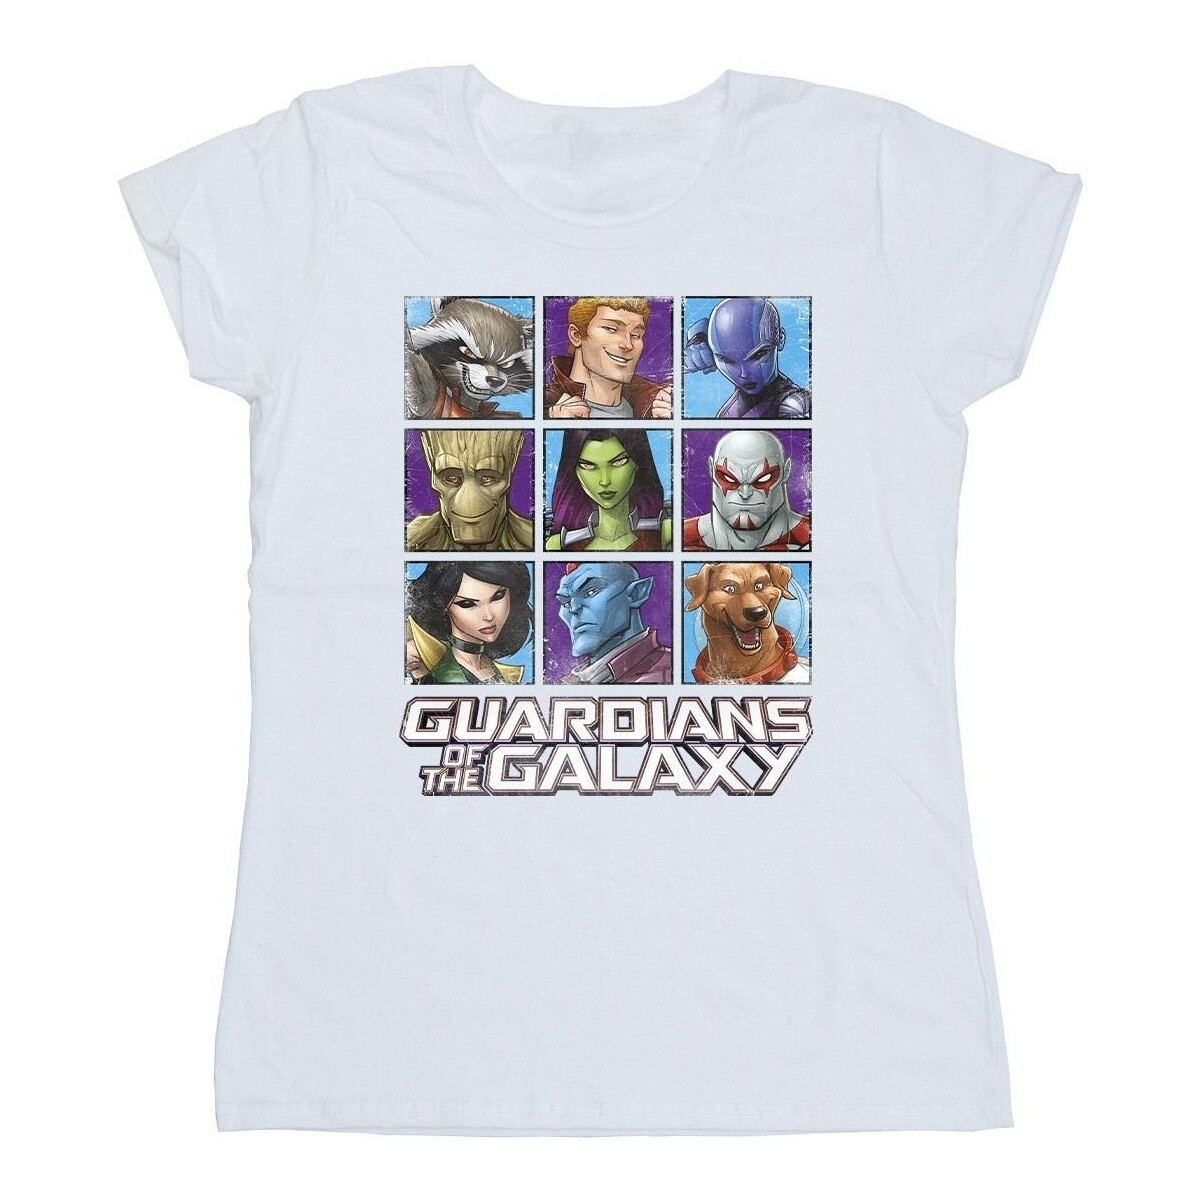 textil Mujer Camisetas manga larga Guardians Of The Galaxy Character Squares Blanco